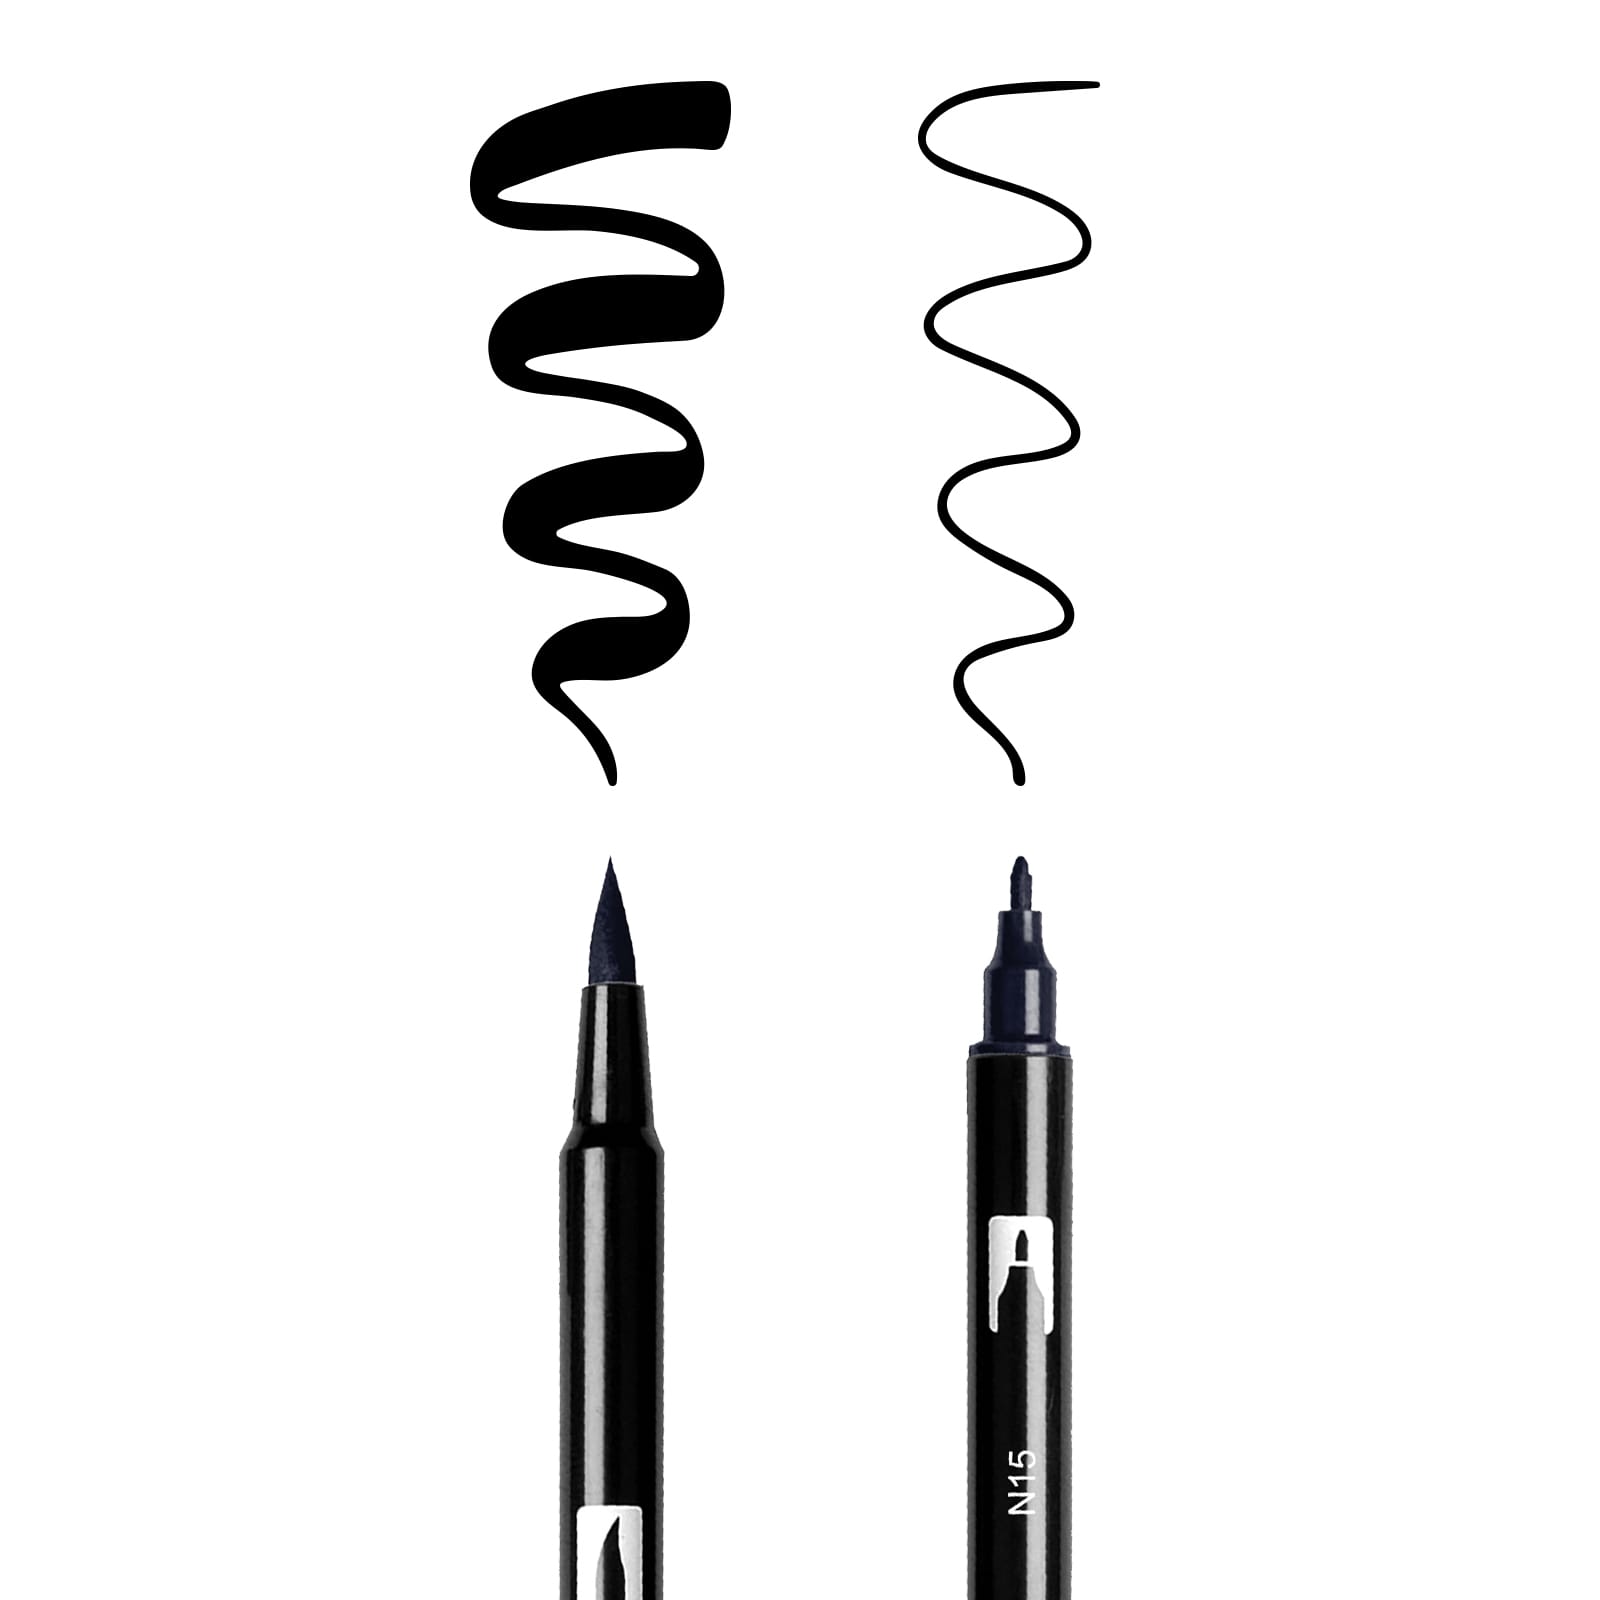 Tombow Landscape Dual Brush Pens